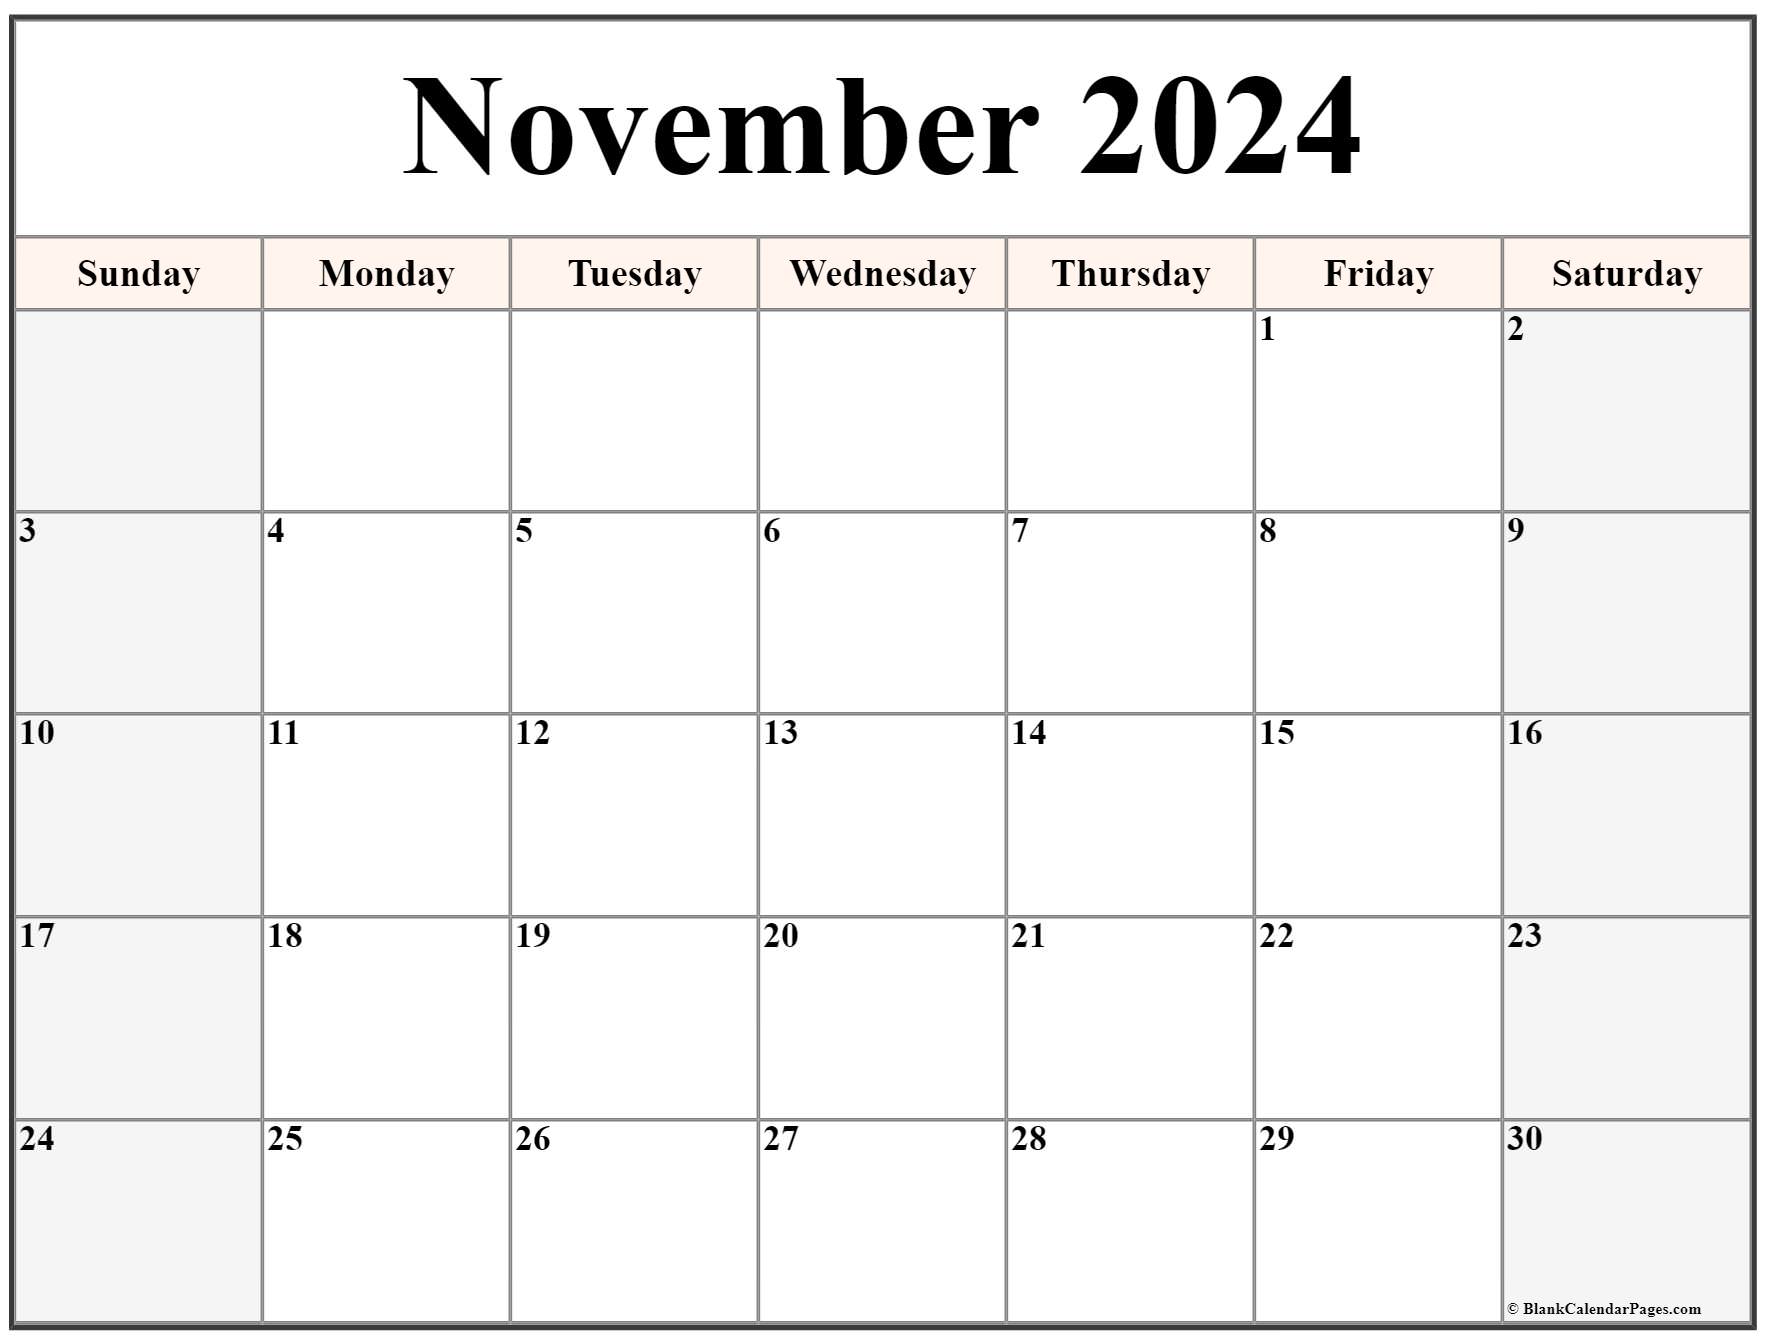 November December 2022 Calendar Printable November 2022 Calendar | Free Printable Calendar Templates